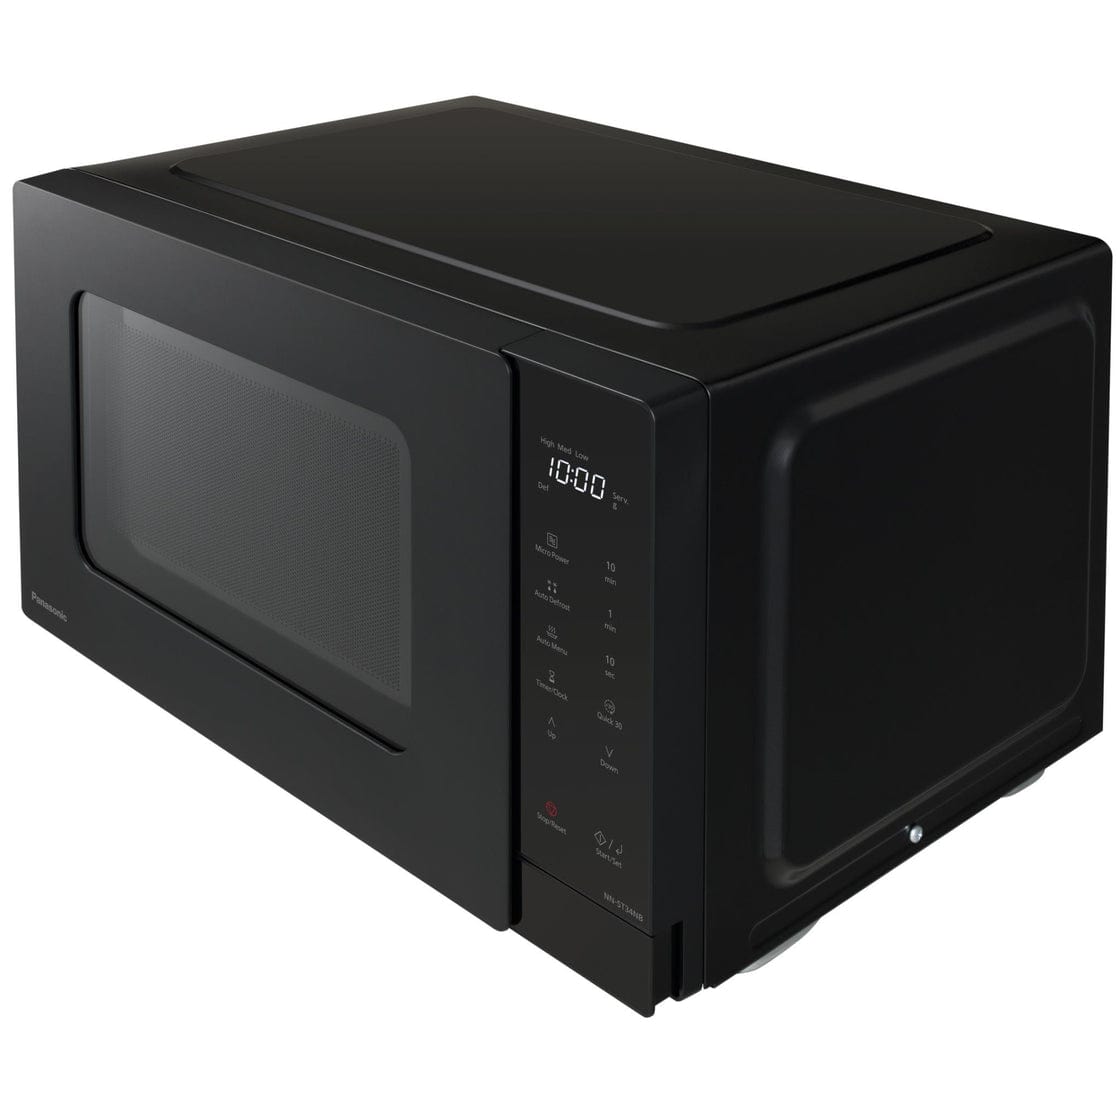 Panasonic 25l 900w microwave oven (black)